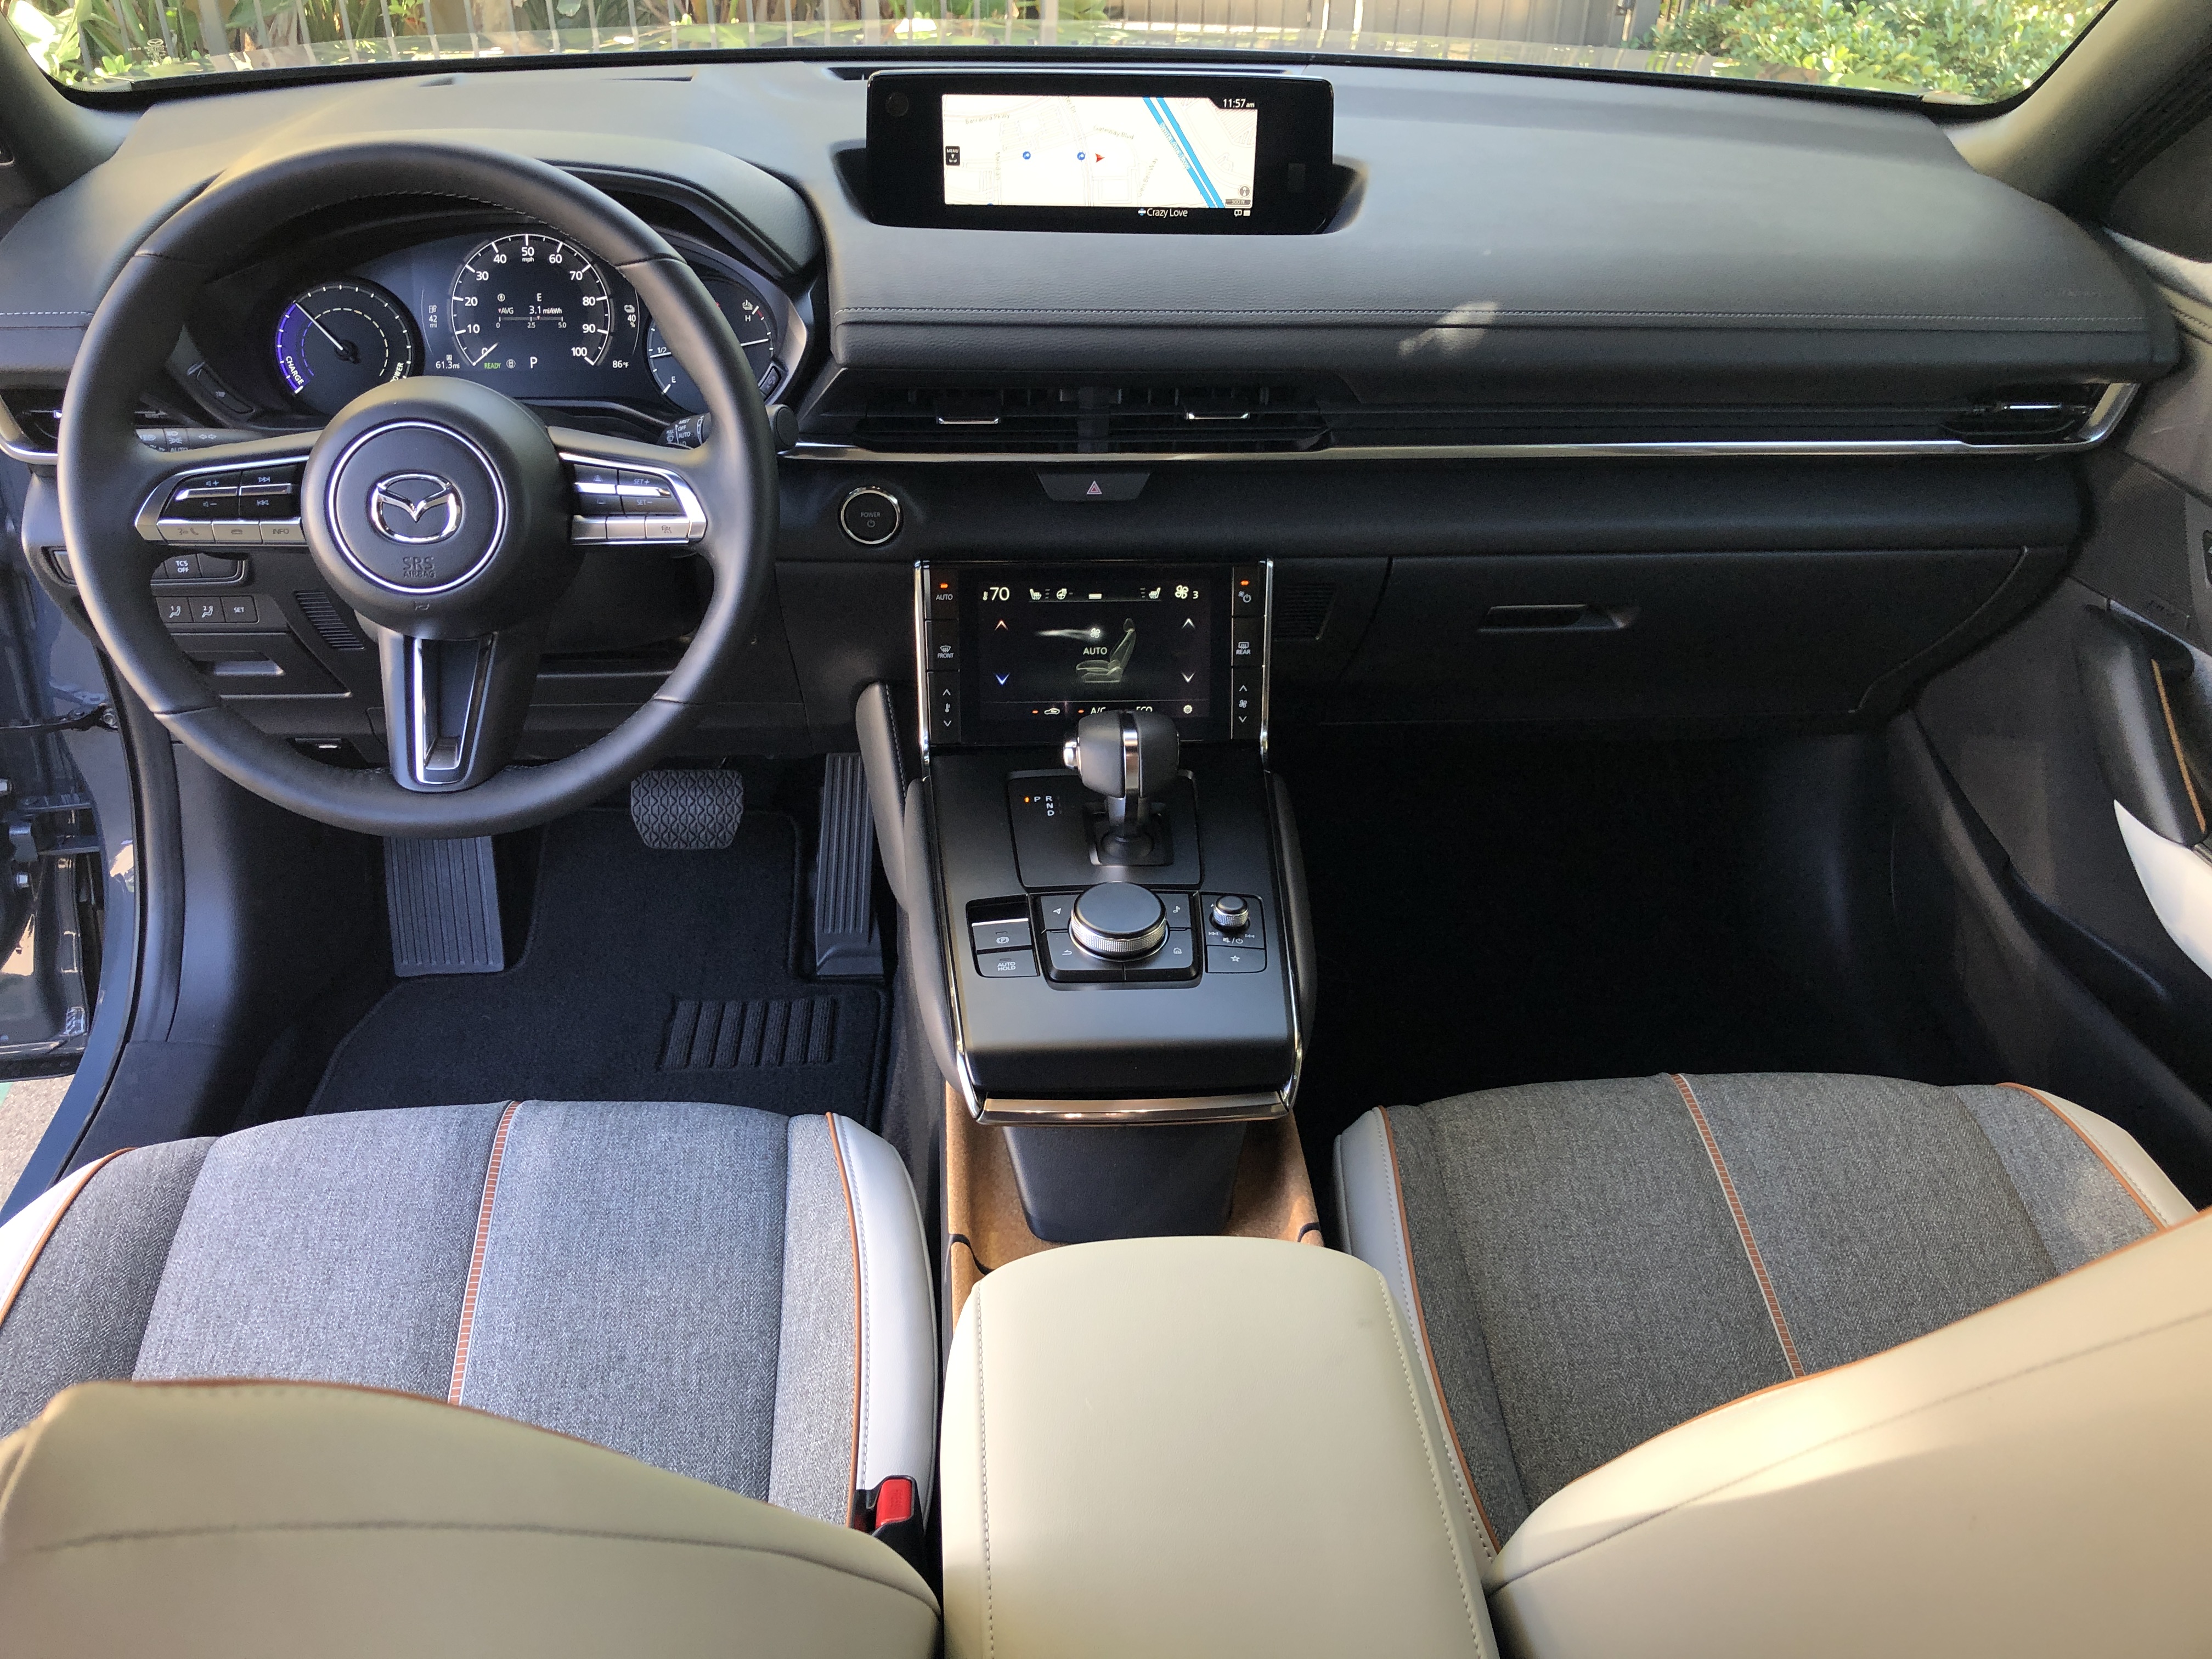 2022 Mazda MX-30 interior